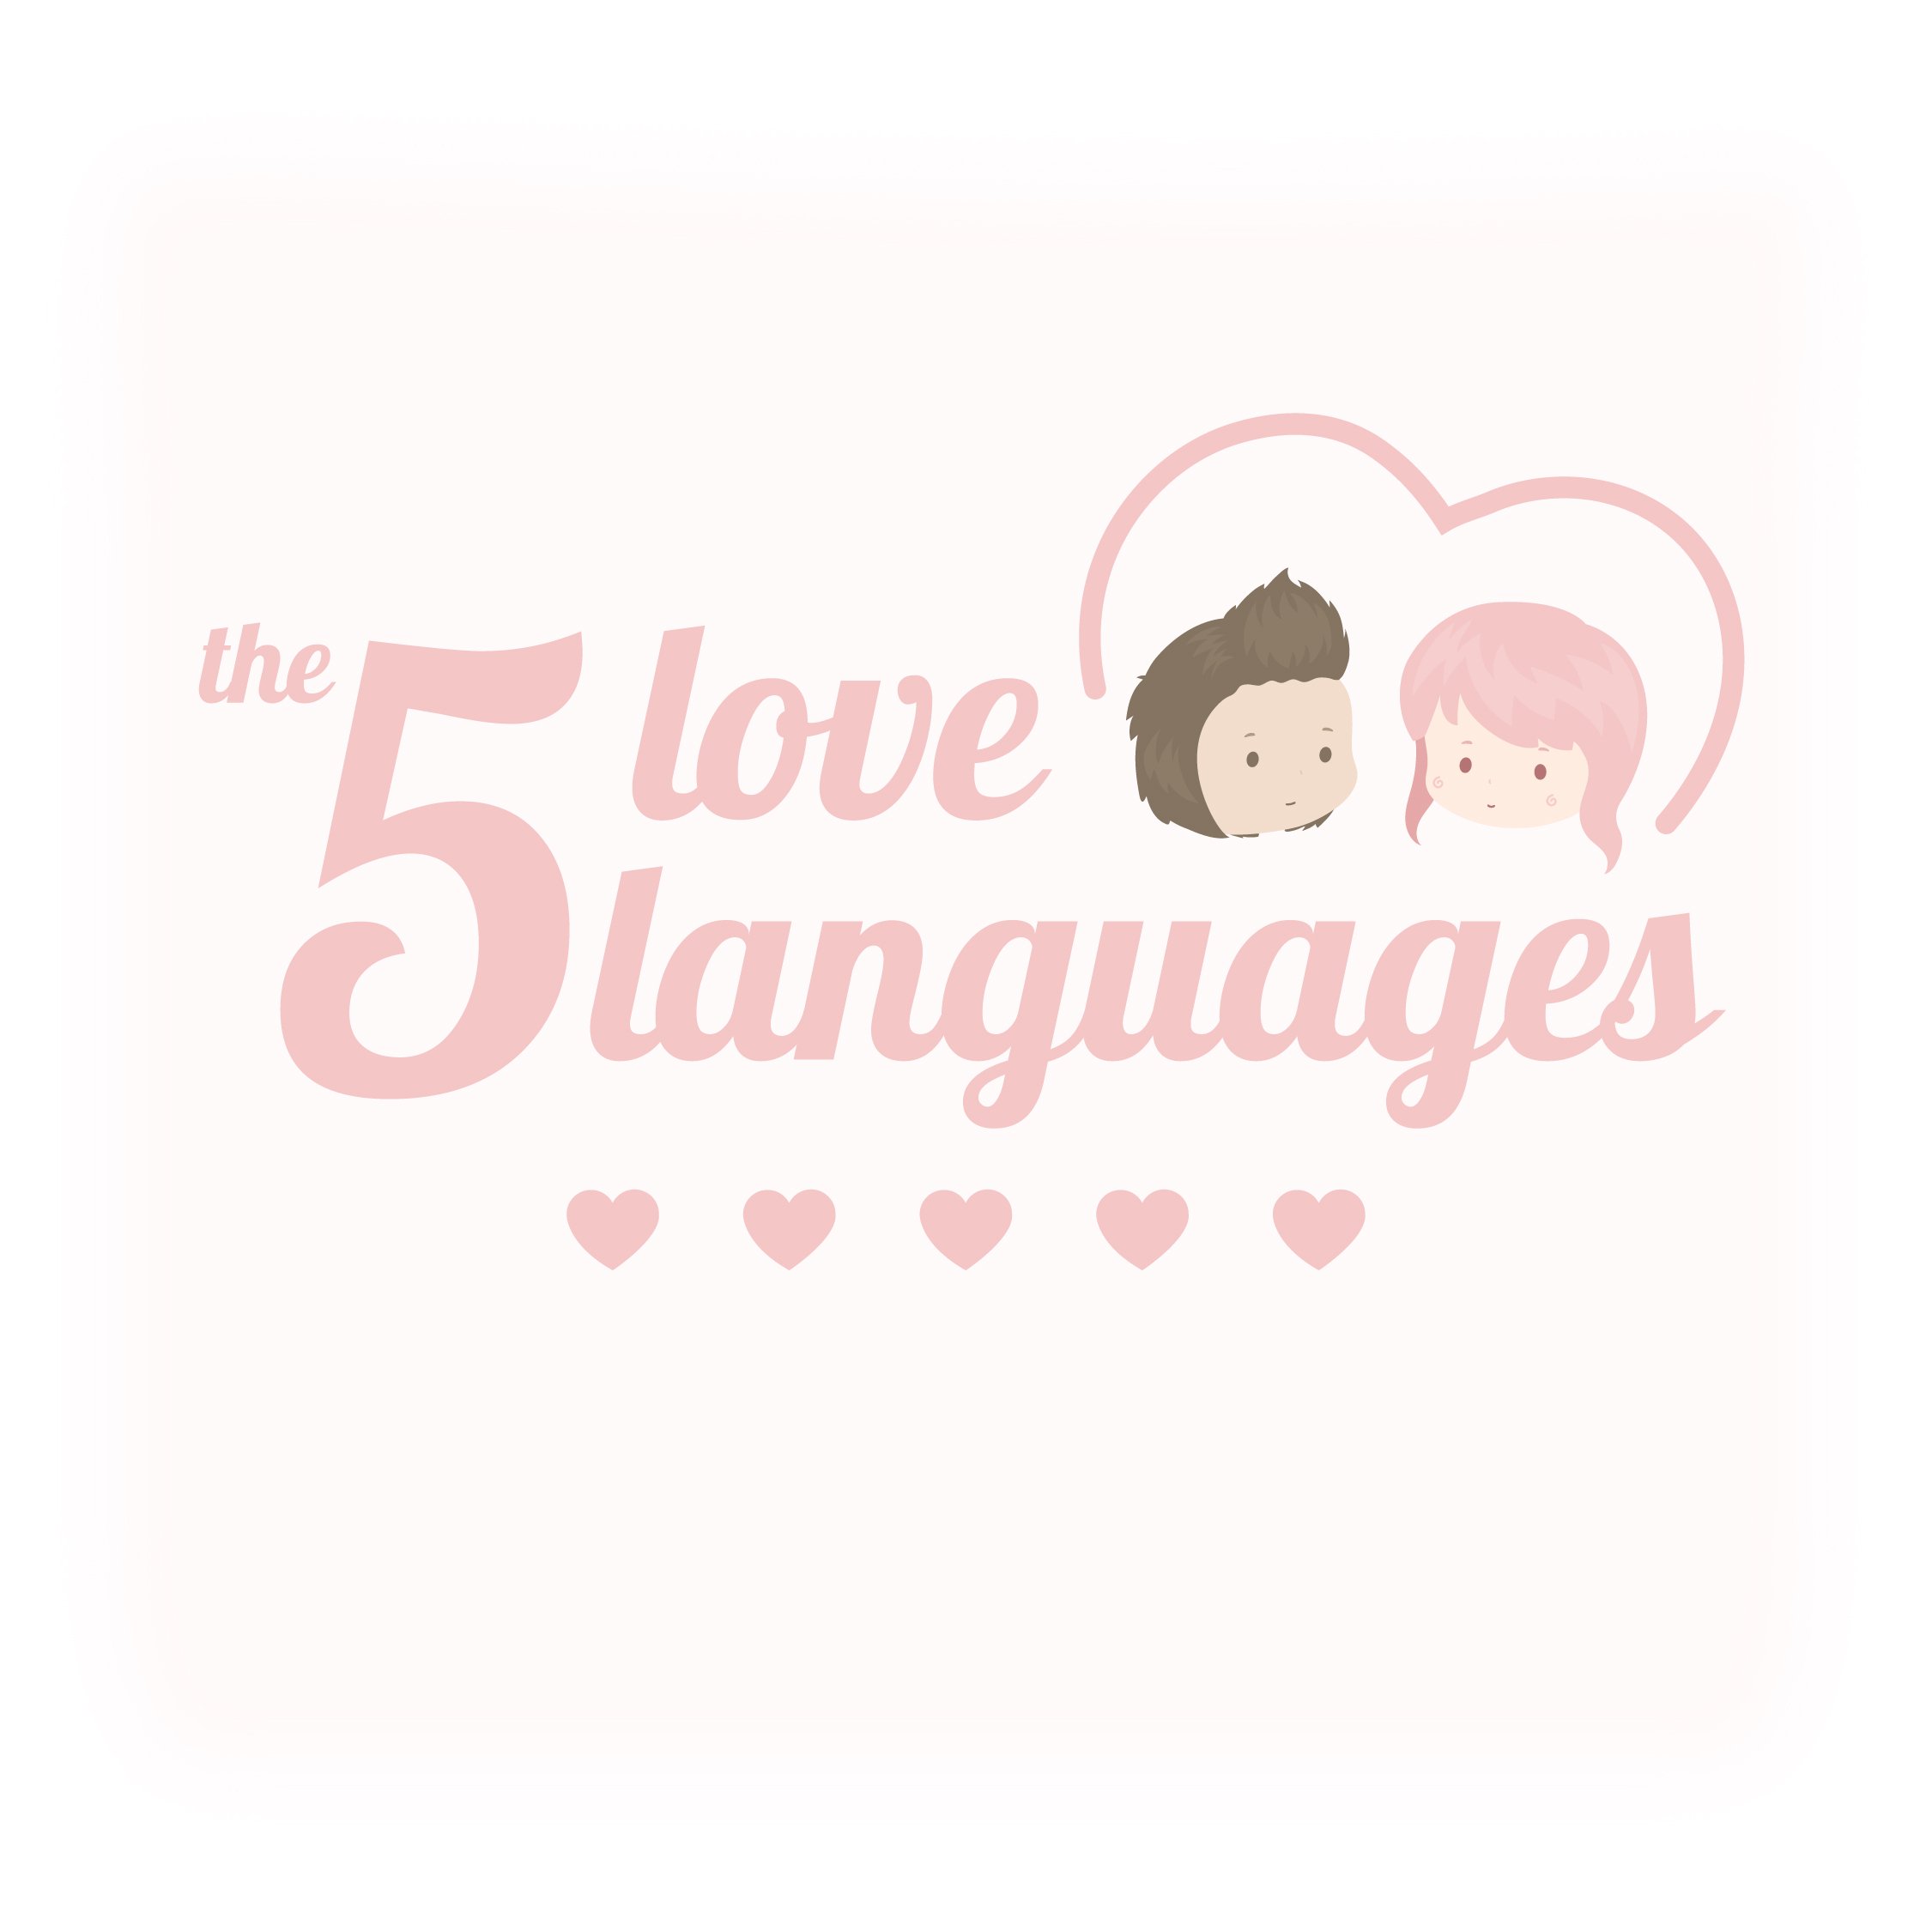 the 5 love langugages.jpg